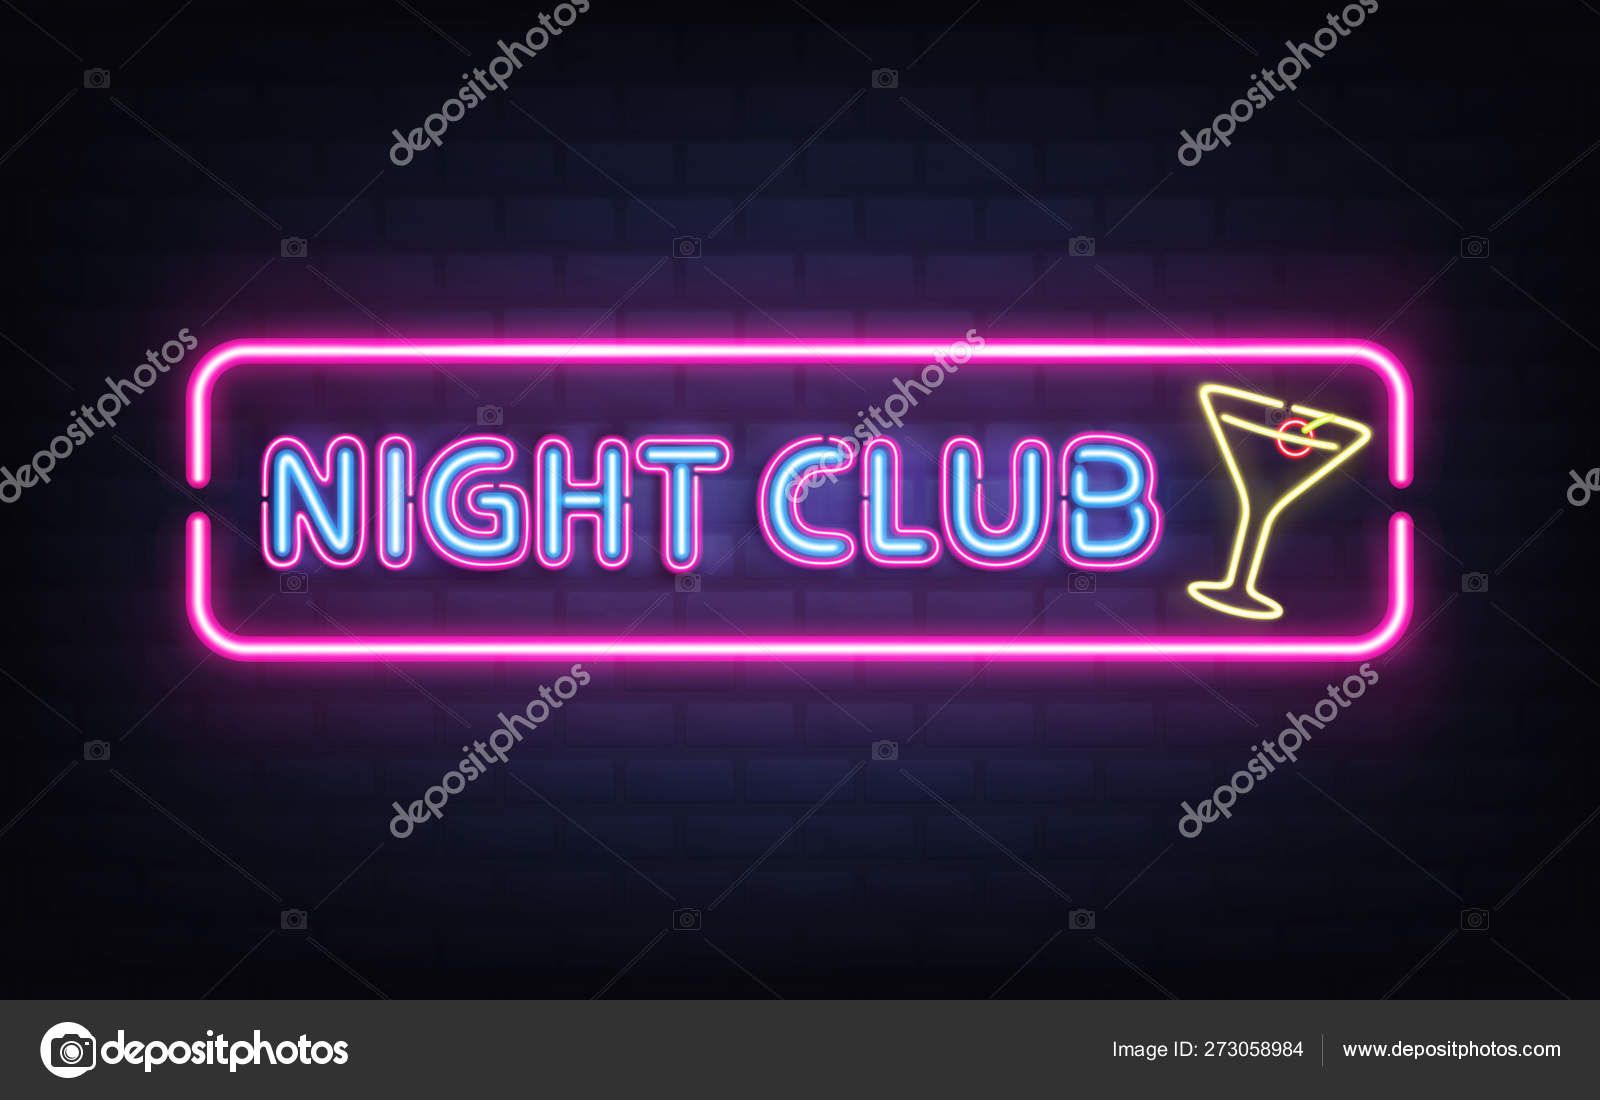 Night Club Cocktail Bar Neon Signboard Vector Stock Vector C Vectorpocket 273058984 - 8597637 76553 neon sign night club roblox